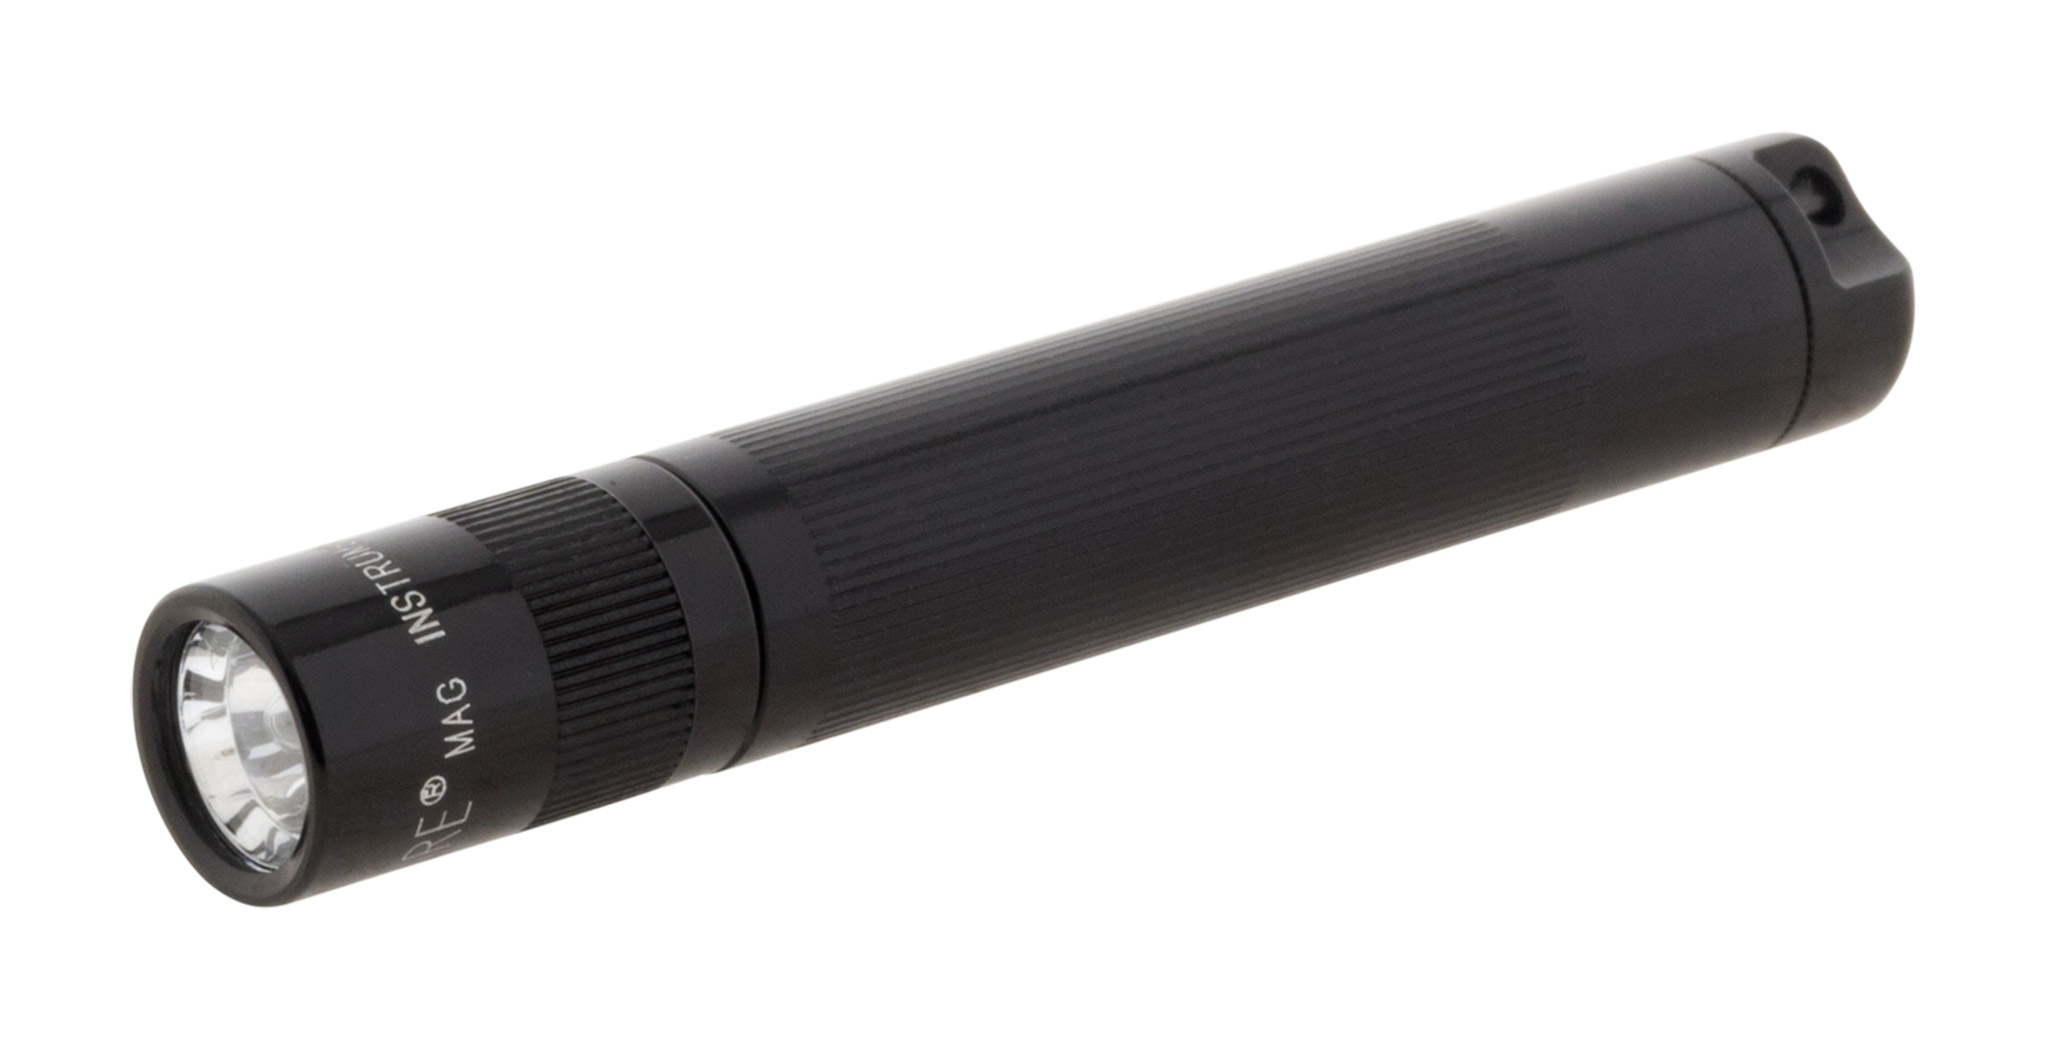 Maglite Light Solitaire AAA Flashlight Mag Lite Pen Light Waterproof Black